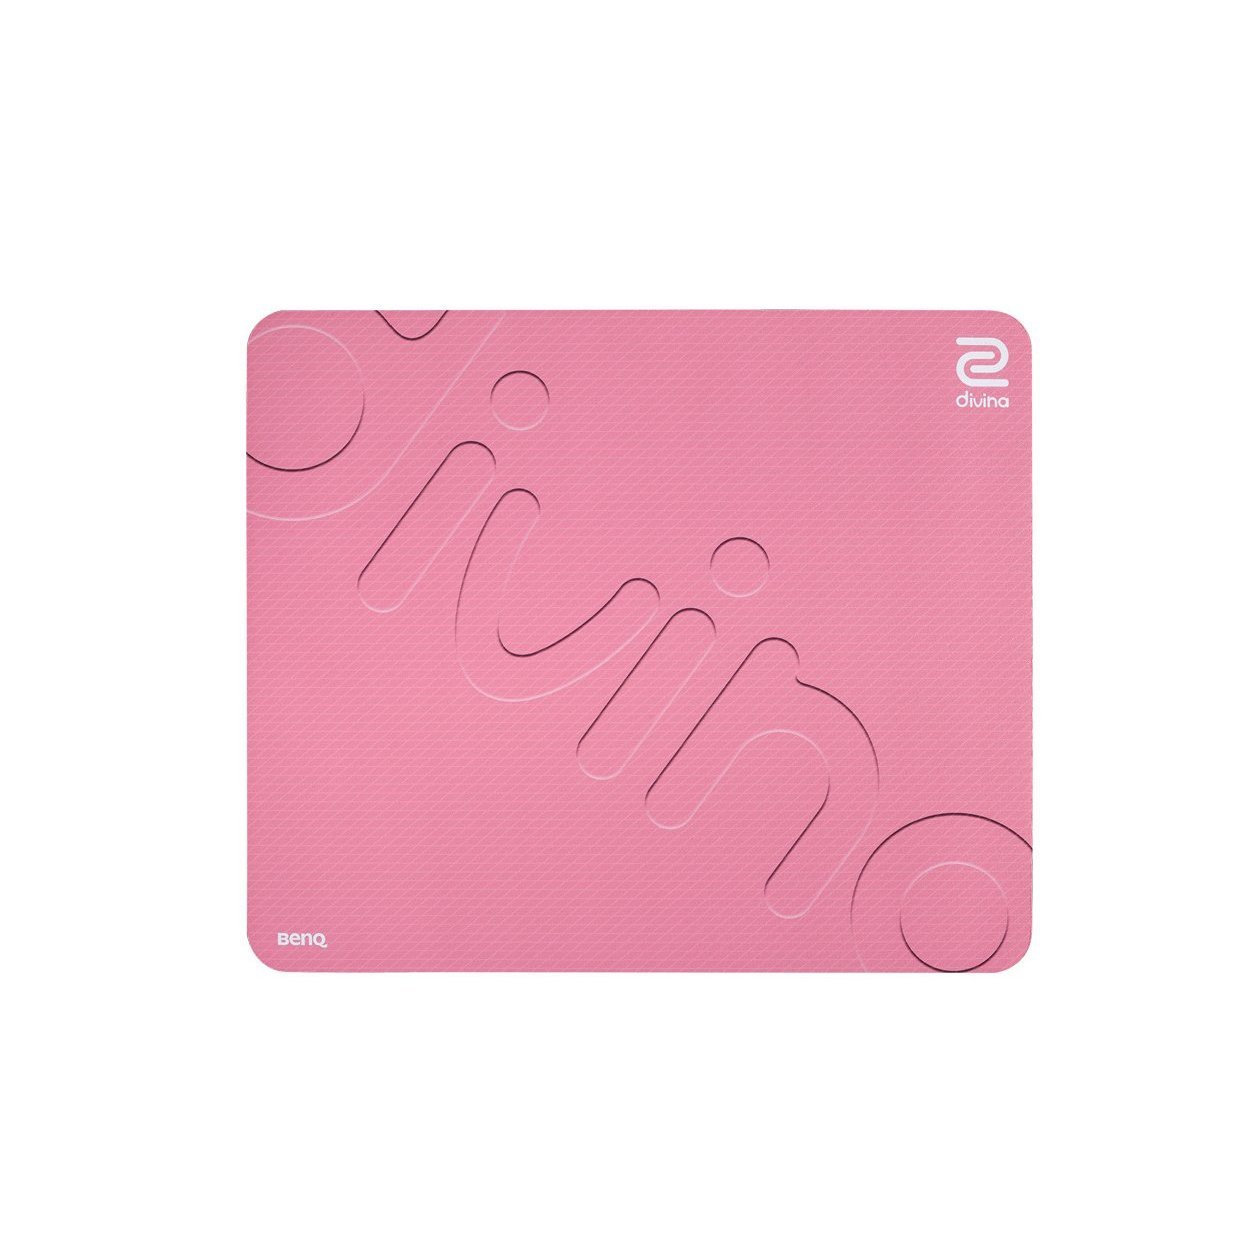 ZOWIE G-SR SE DIVINA PINK Mouse Pad – Inc